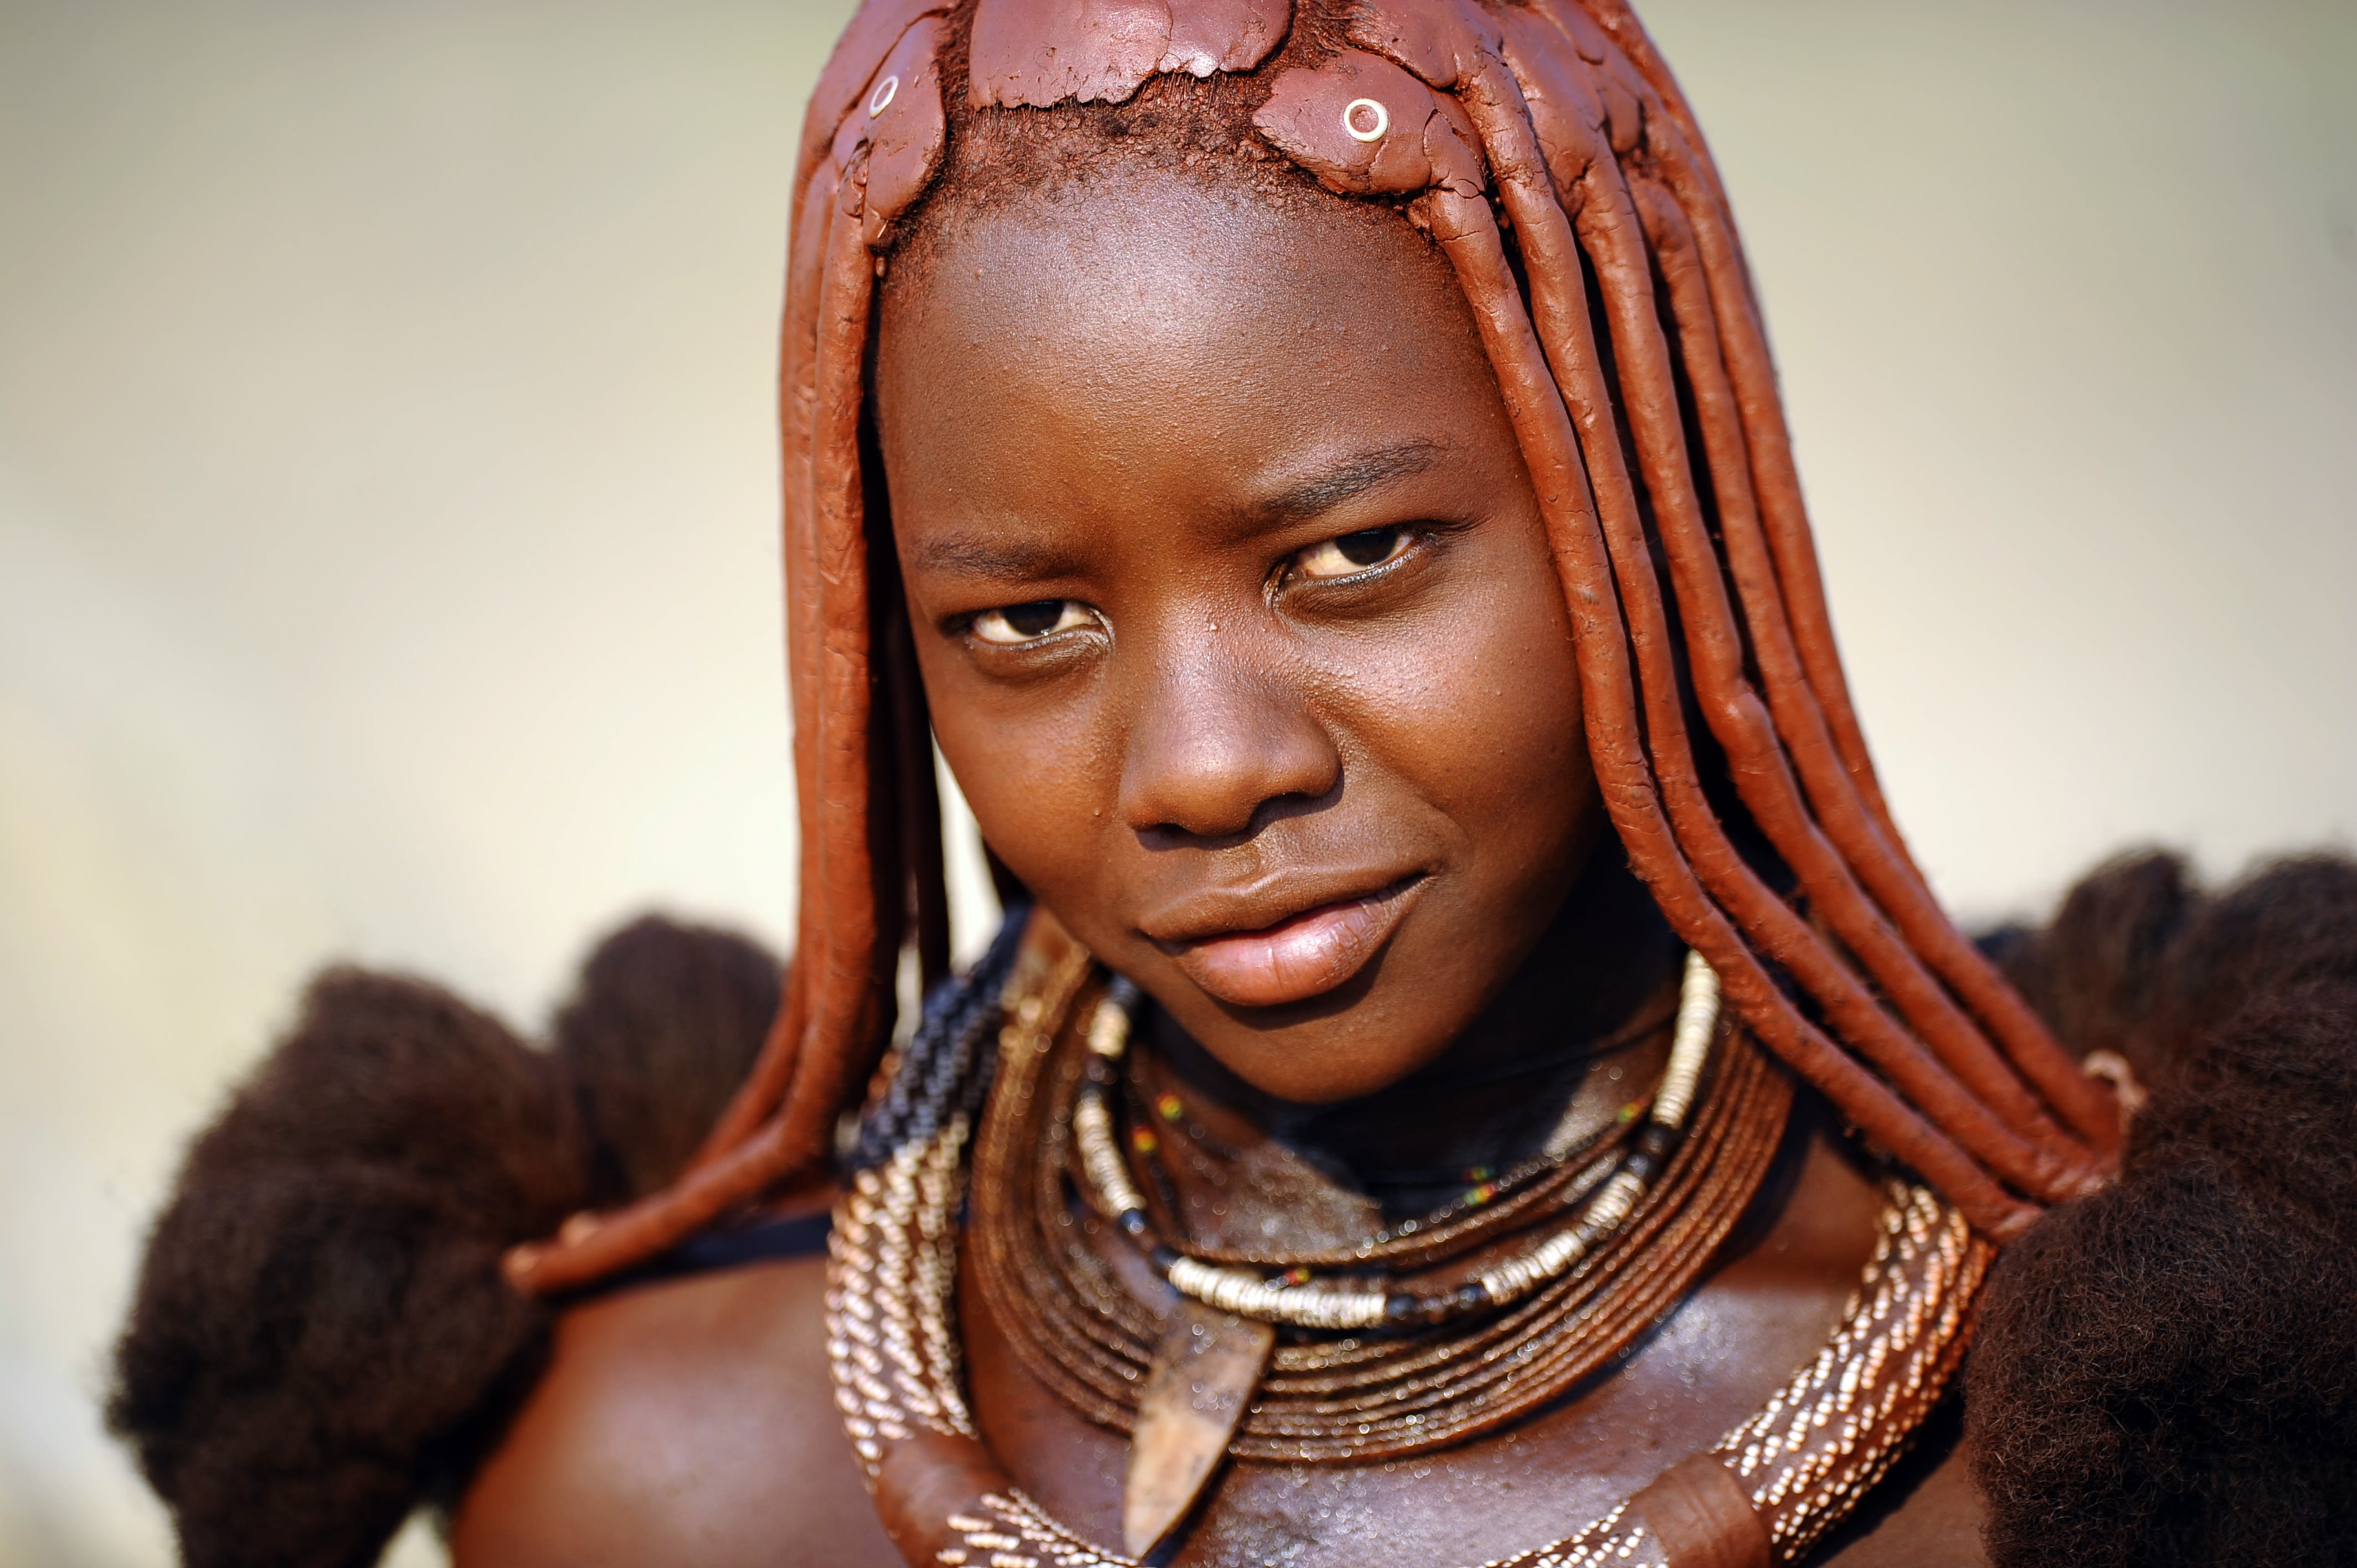 daya yu share african primitive tribes rituals photos